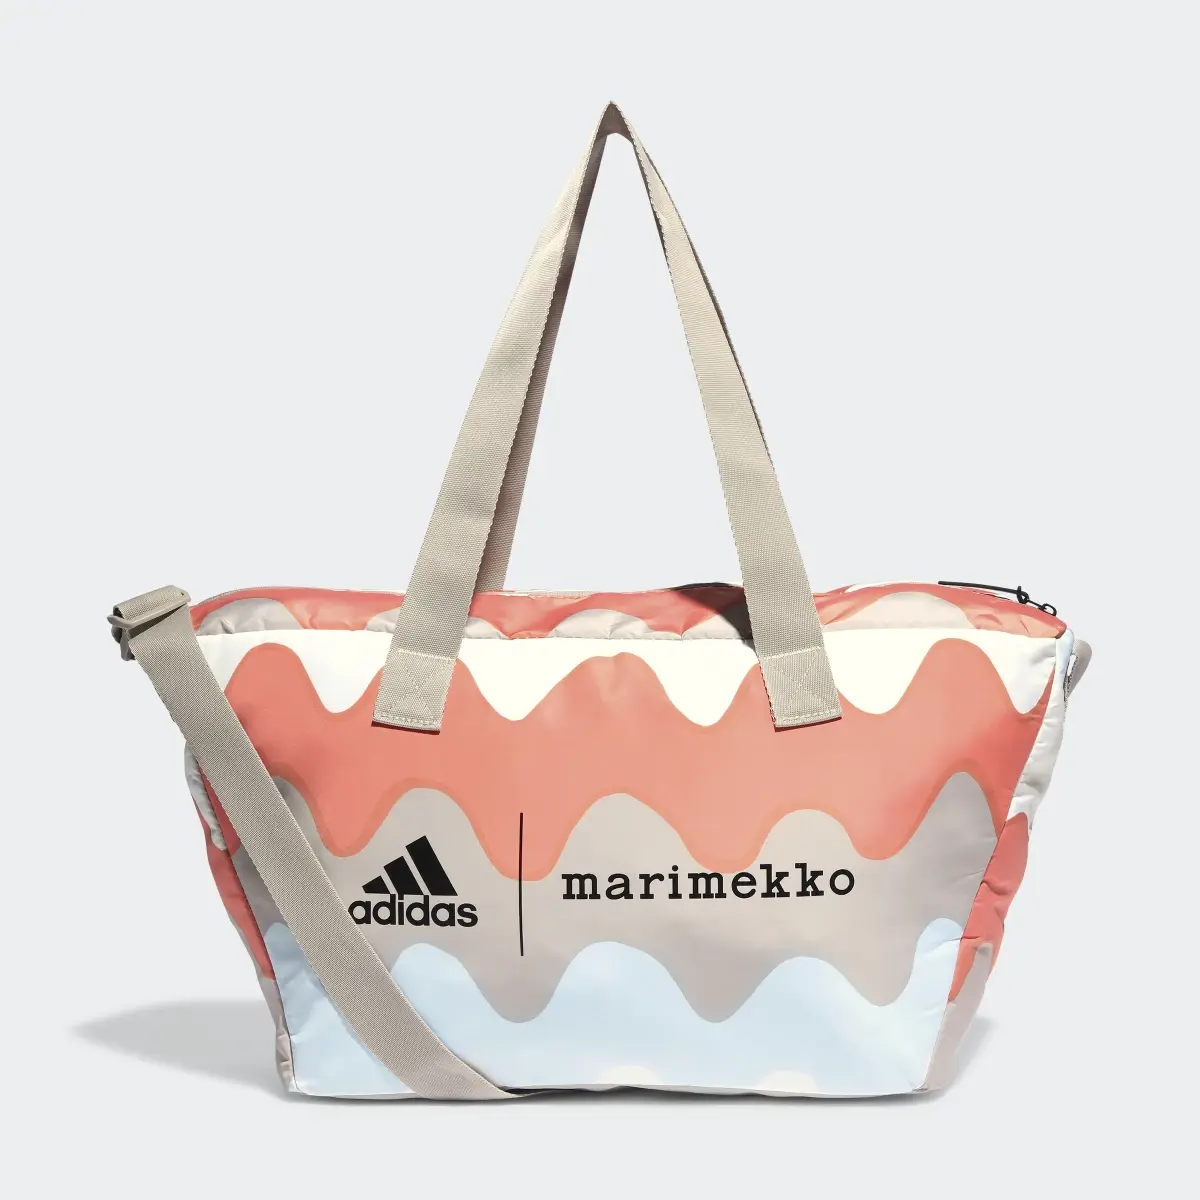 Adidas x Marimekko Shopper Designed 2 Move Trainingstasche. 2